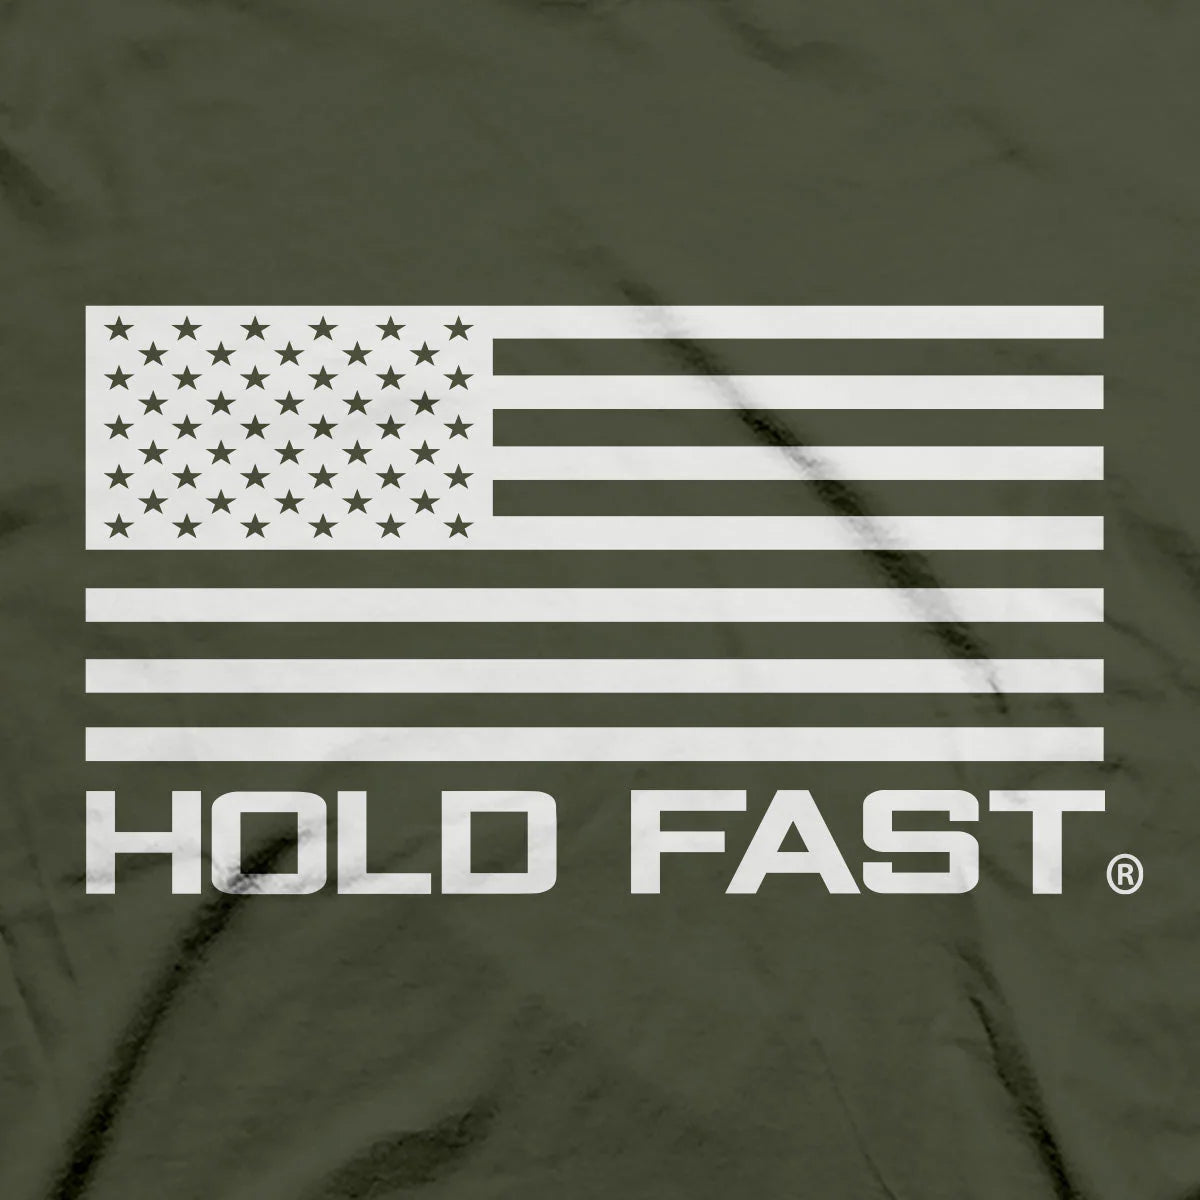 HOLD FAST Mens T-Shirt Thank A Veteran HOLD FAST® Apparel Mens Short Sleeve T-shirts